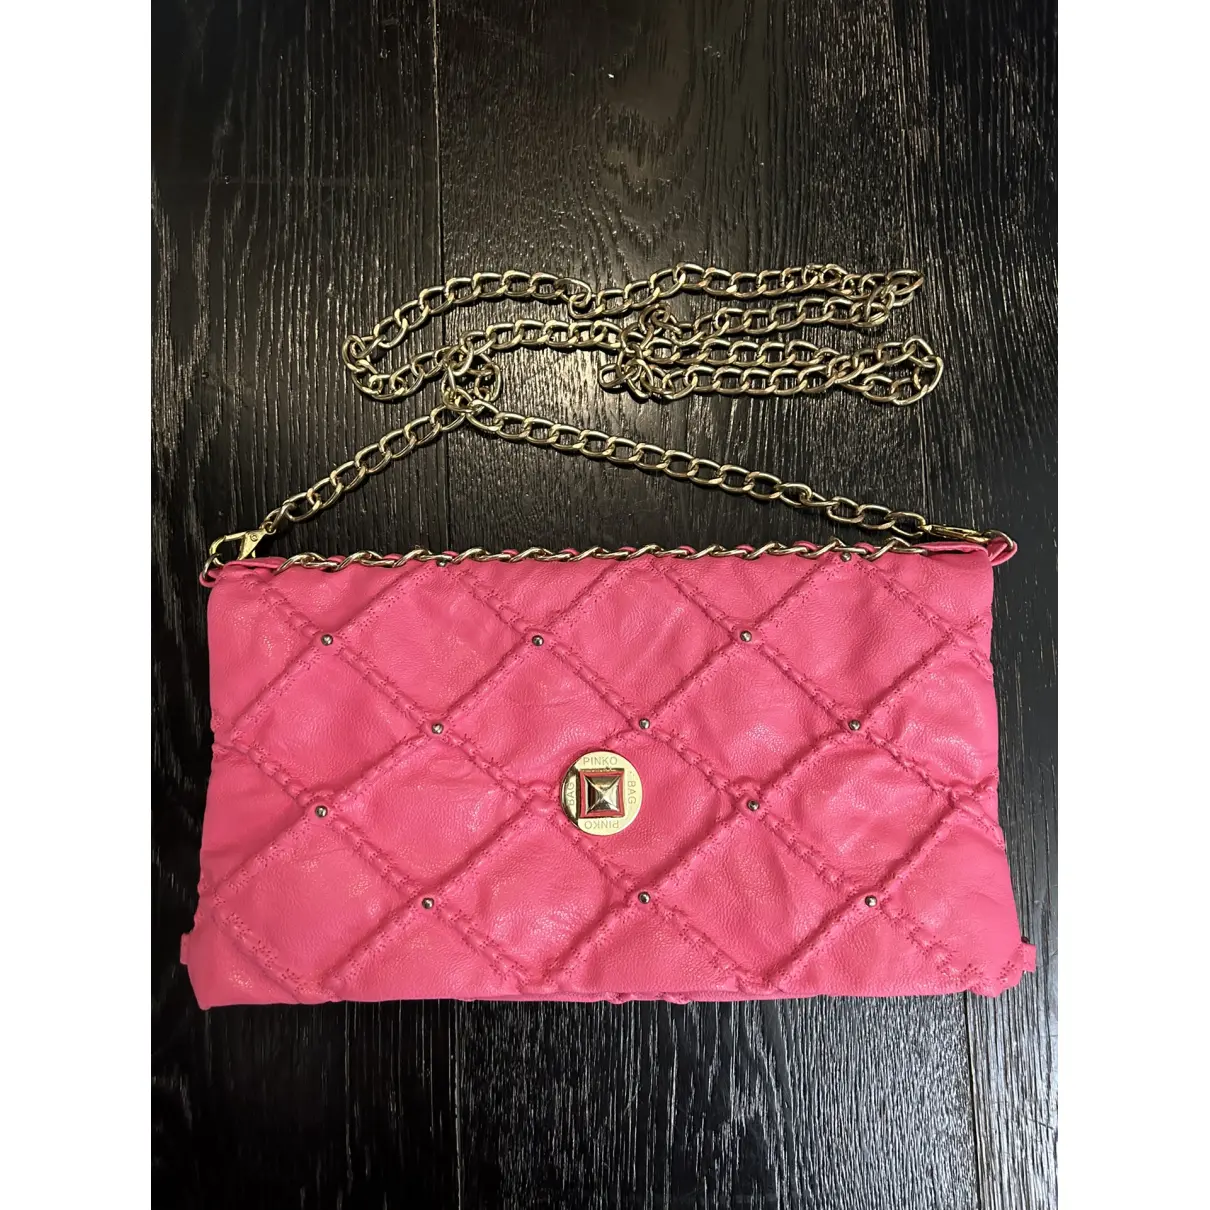 Buy Pinko Leather clutch bag online